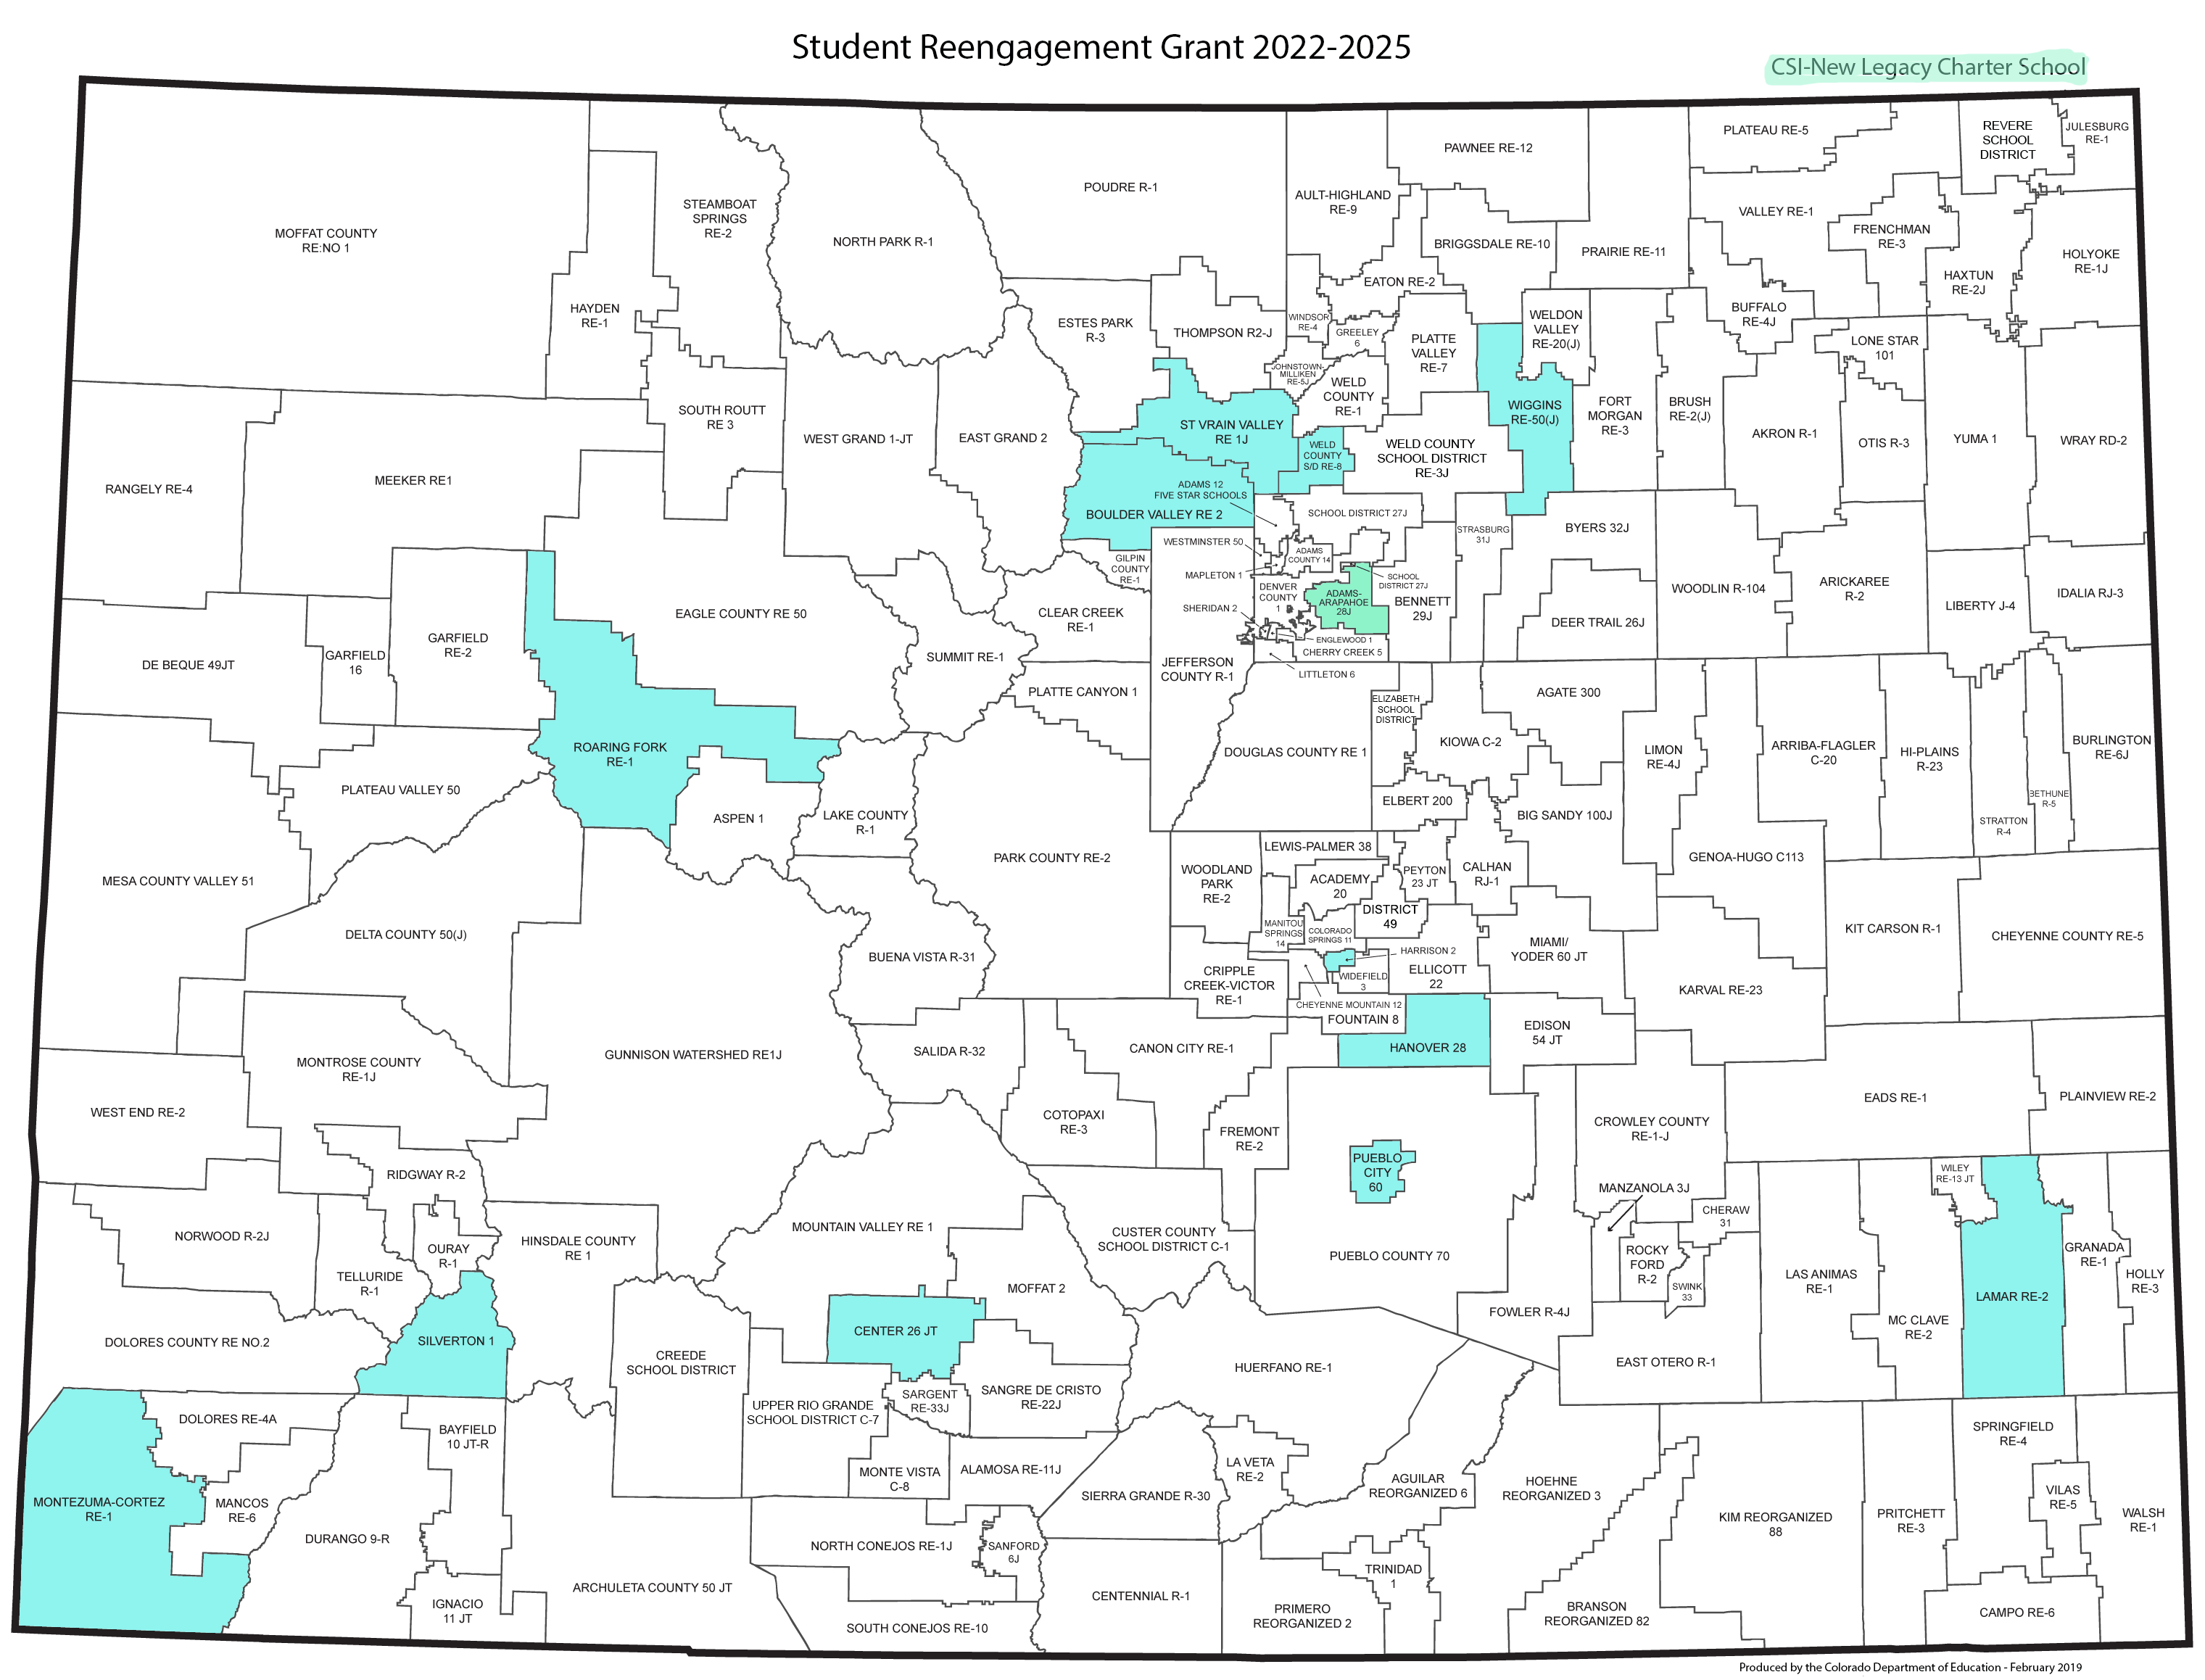 SRG Cohort 3 Map of Grantees